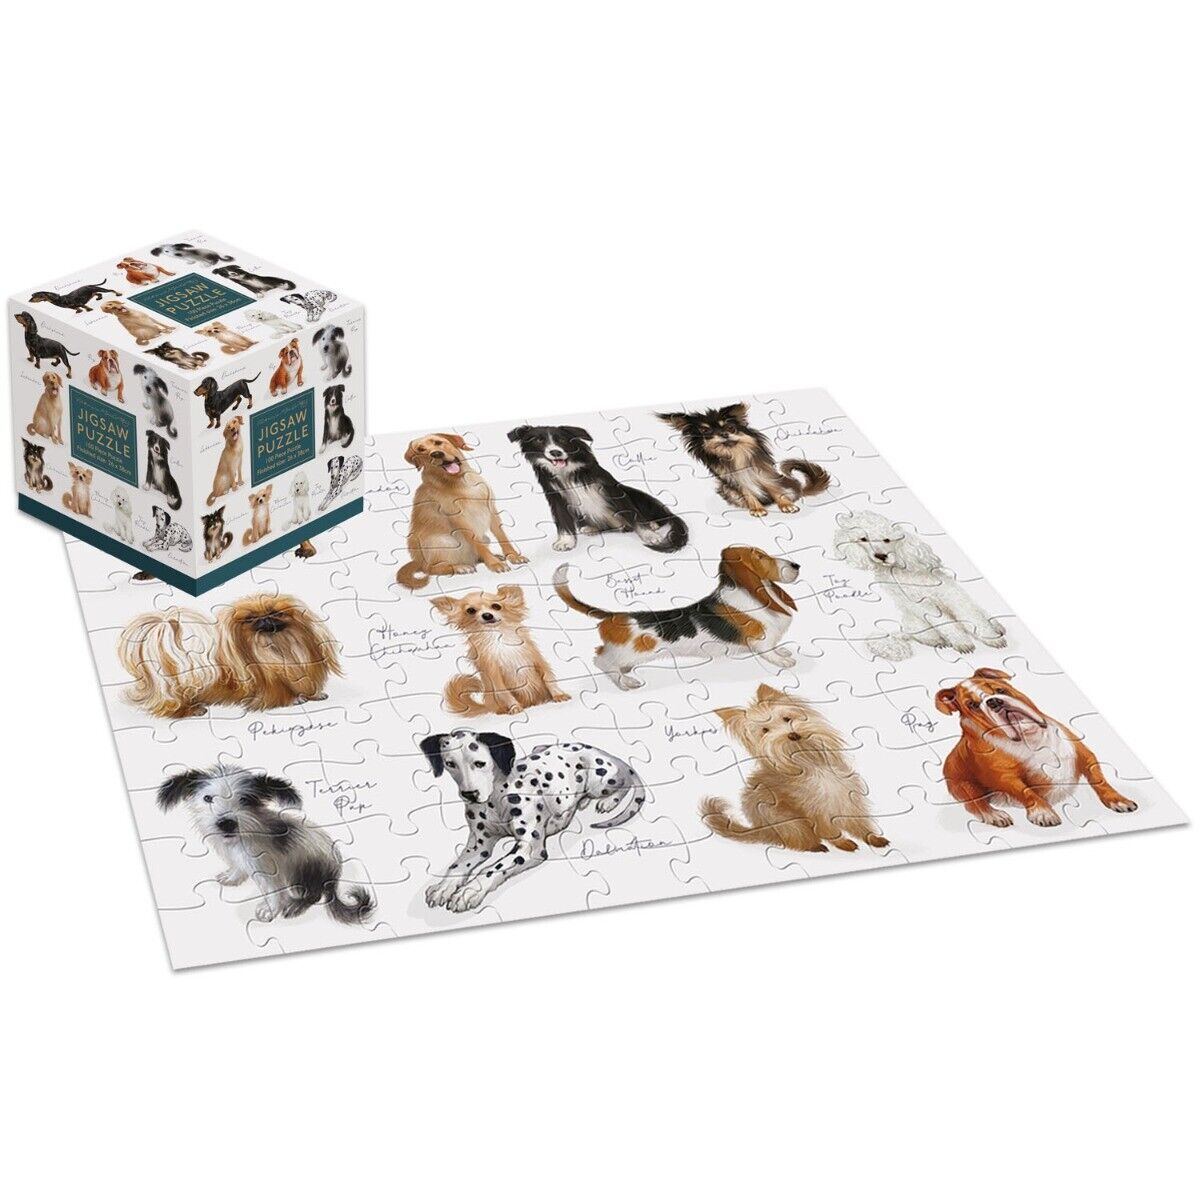 Dogs | 100 Piece Jigsaw Puzzle